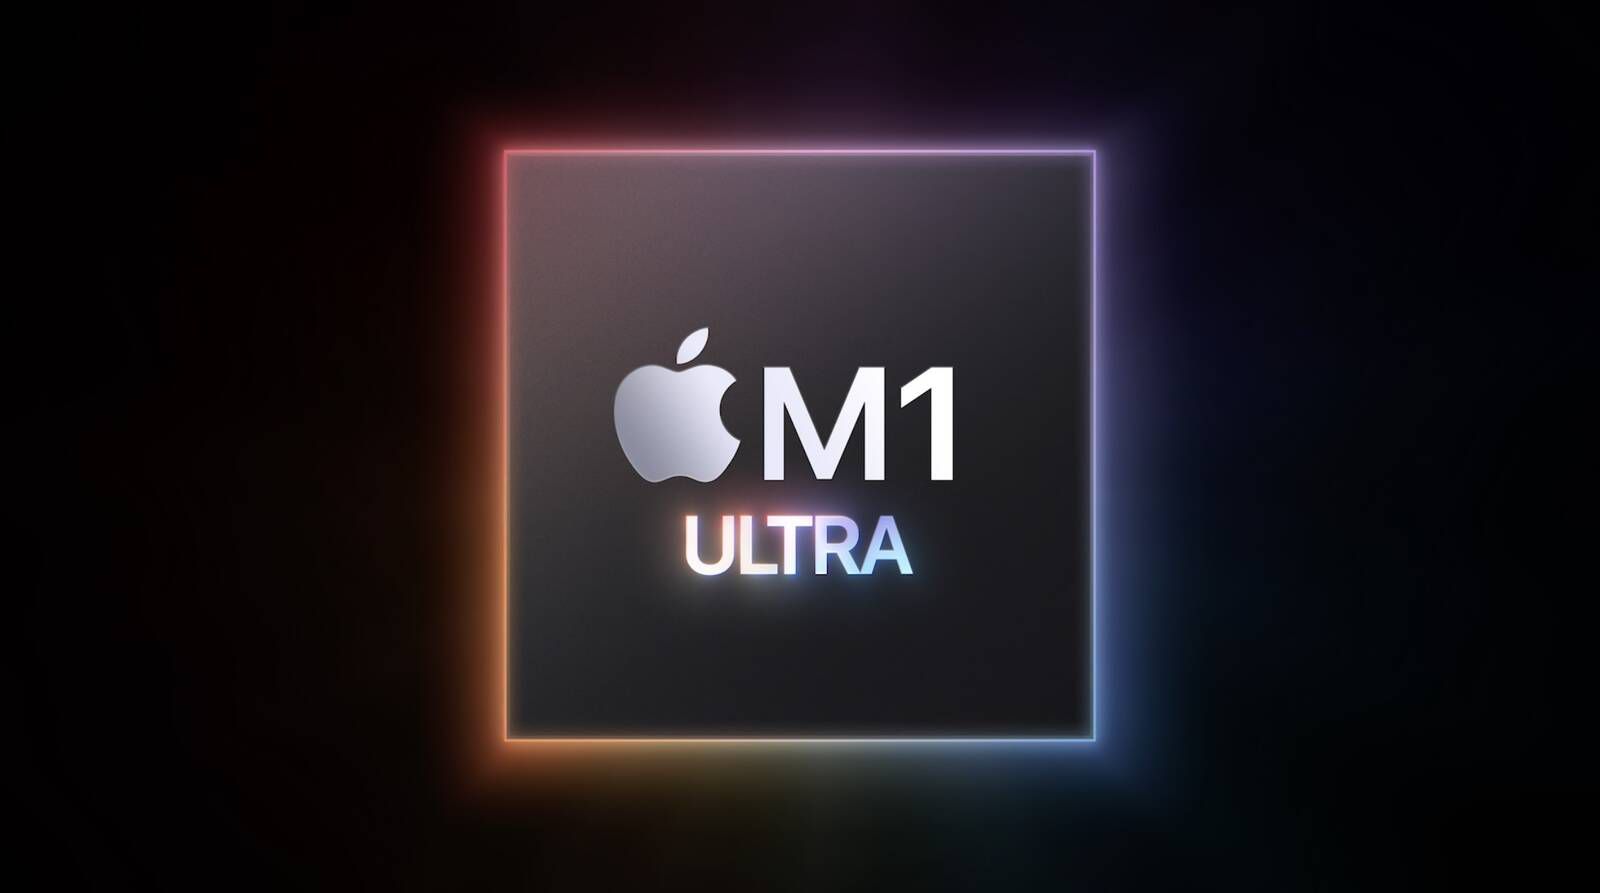 M1 Ultra 跑分在Geekbench 出爐，速度比28核 intel 快56%以上